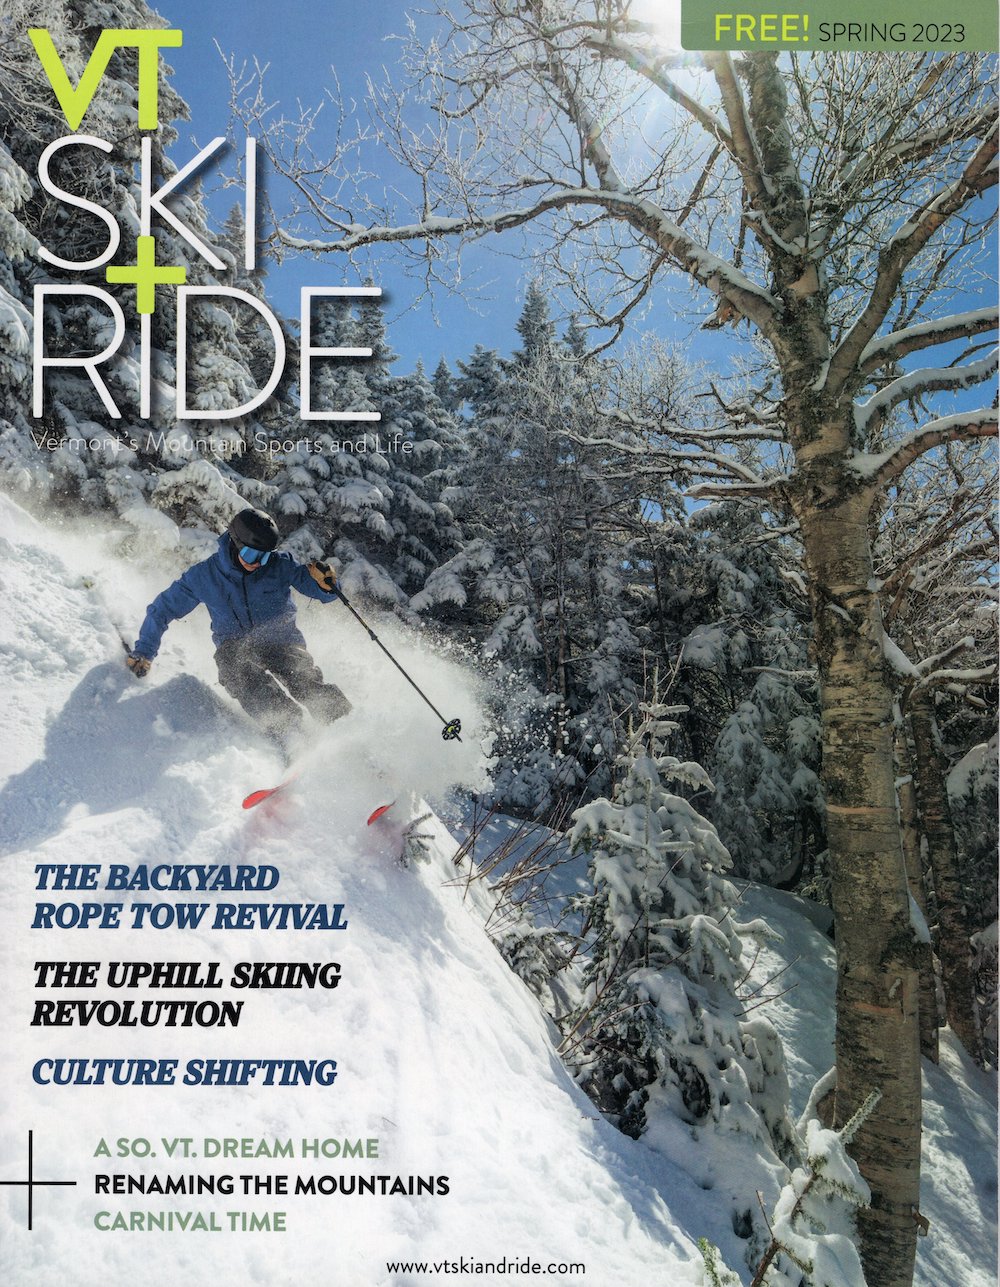 VT Ski & Ride brochure full size